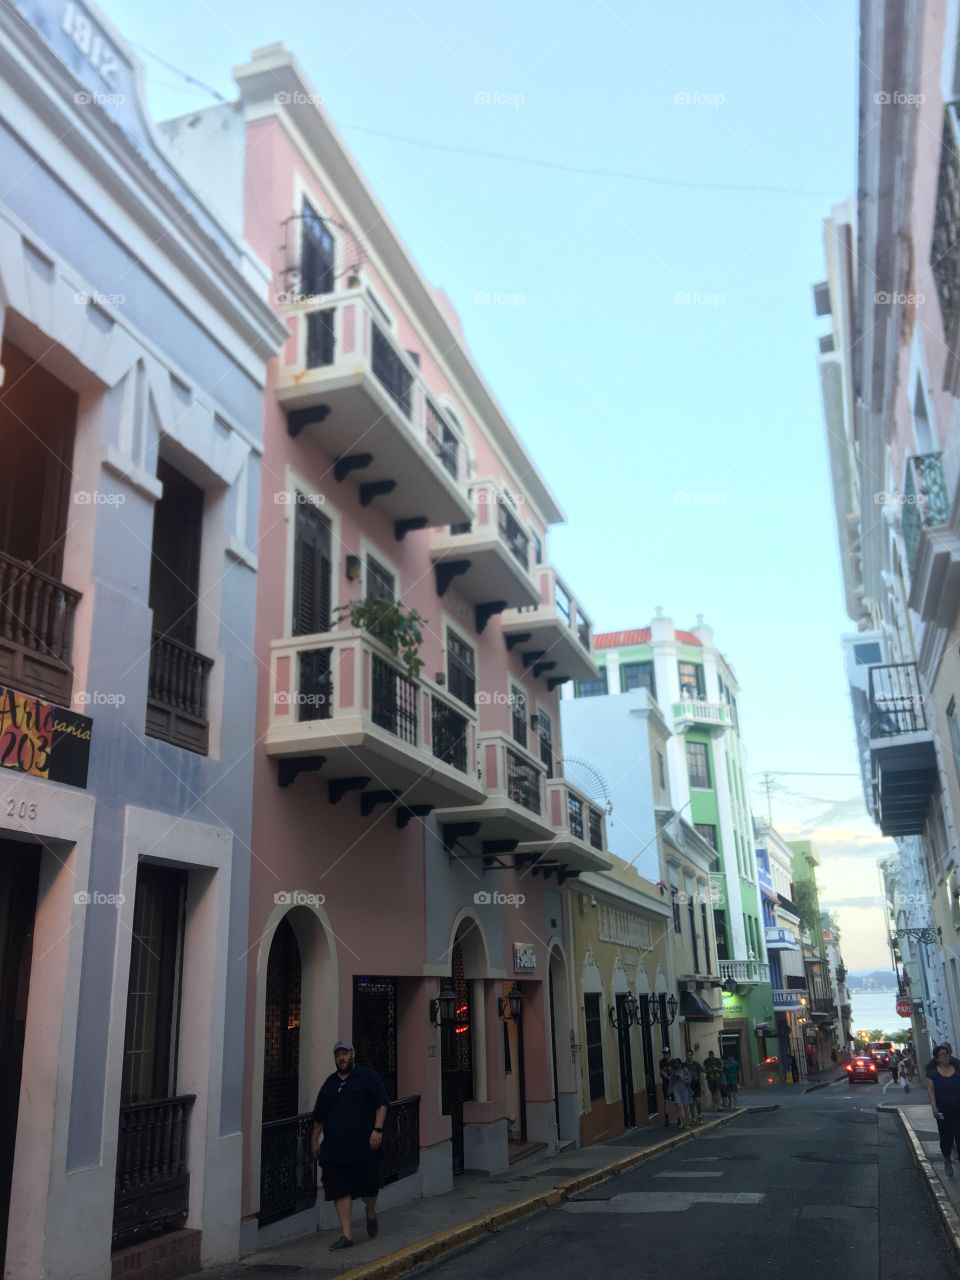 Gorgeous street in San Juan, Puerto Rico! Huge tourist attraction